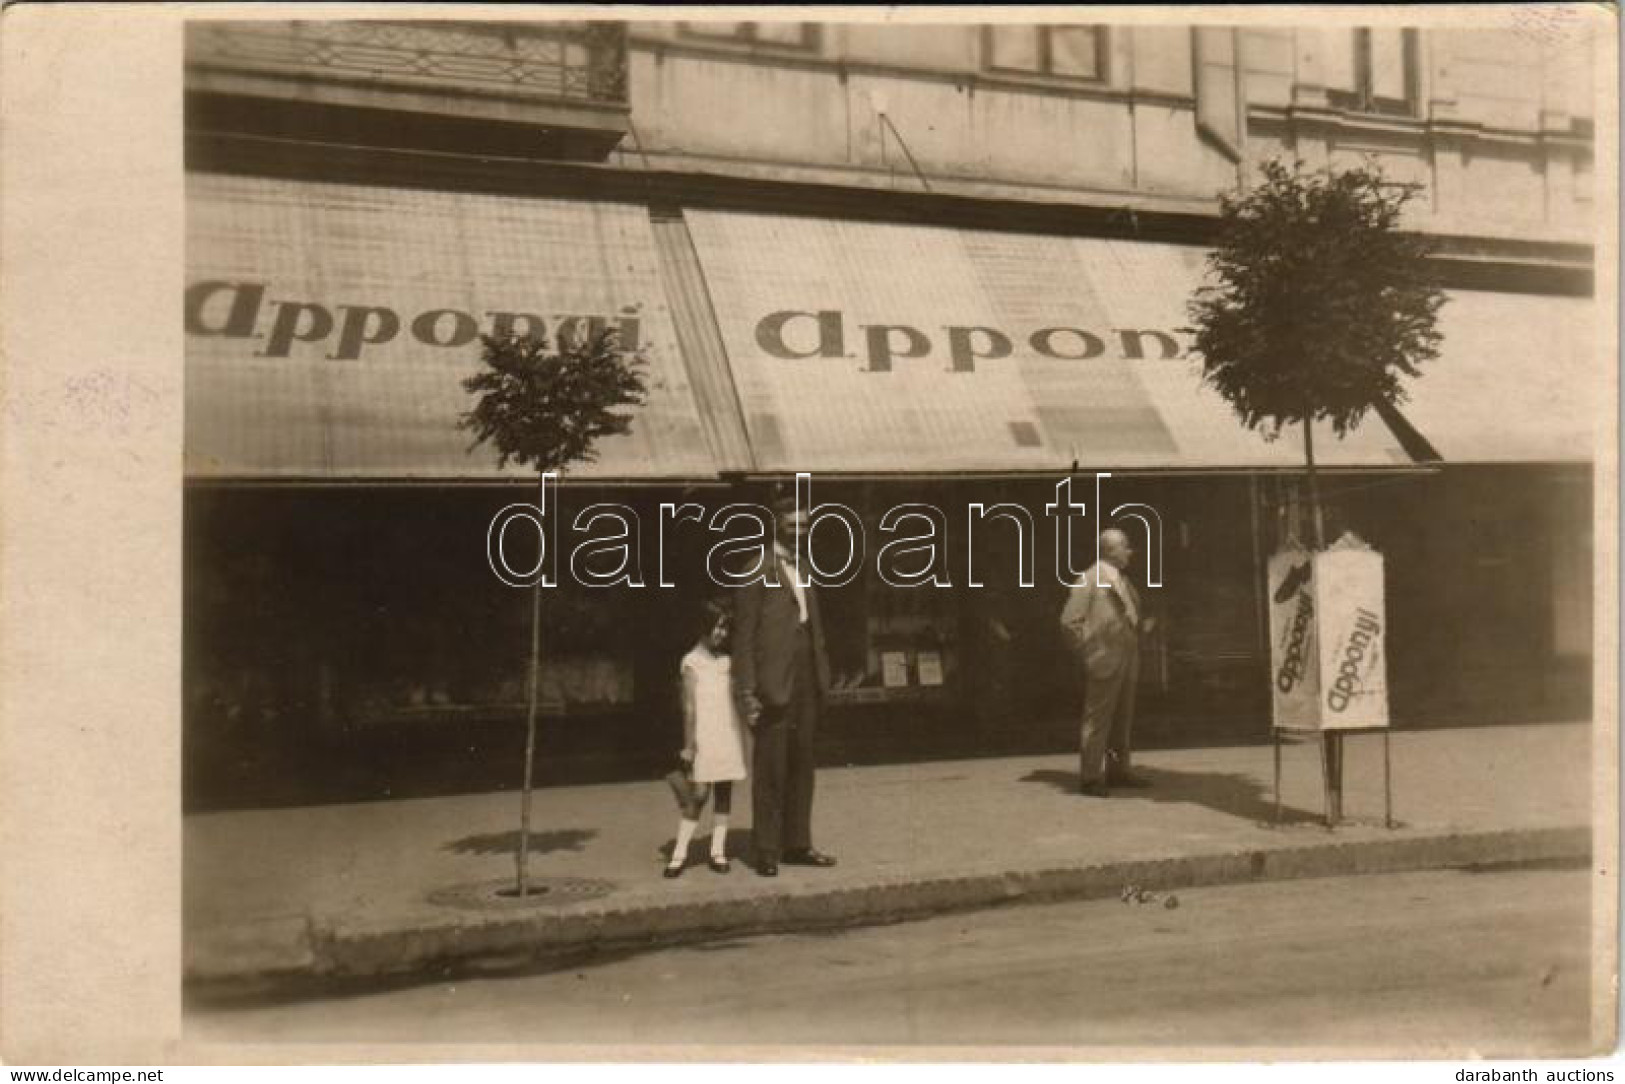 T2/T3 1931 Arad, Utca, Apponyi Cipő üzlet / Shoe Store, Shop, Street View. Photo - Sin Clasificación